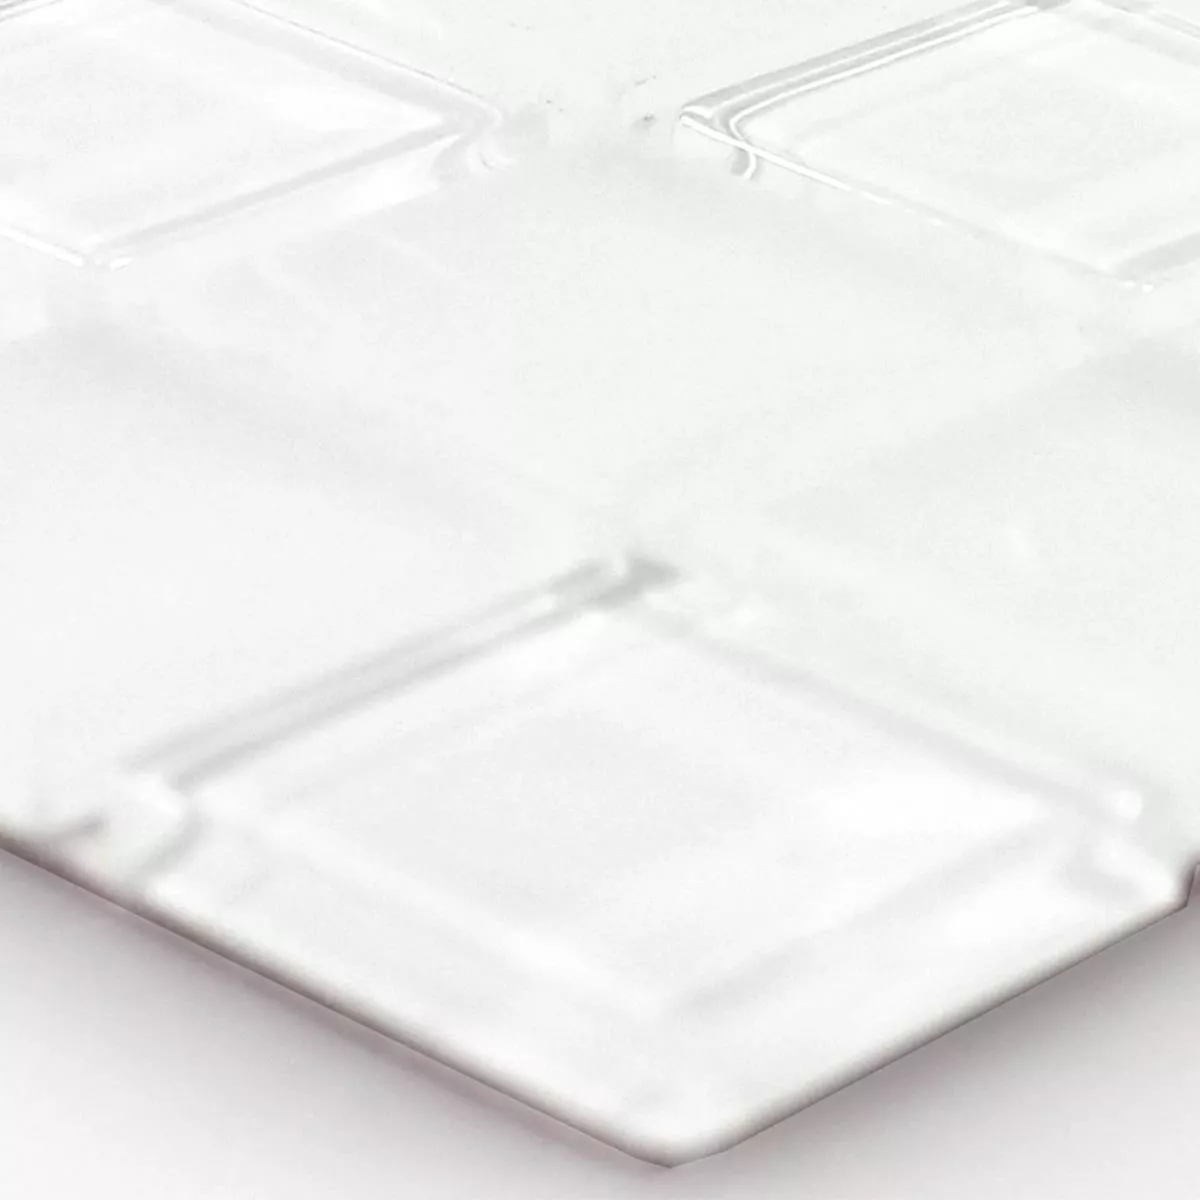 Sample Mosaic Tiles Glass Self Adhesive White